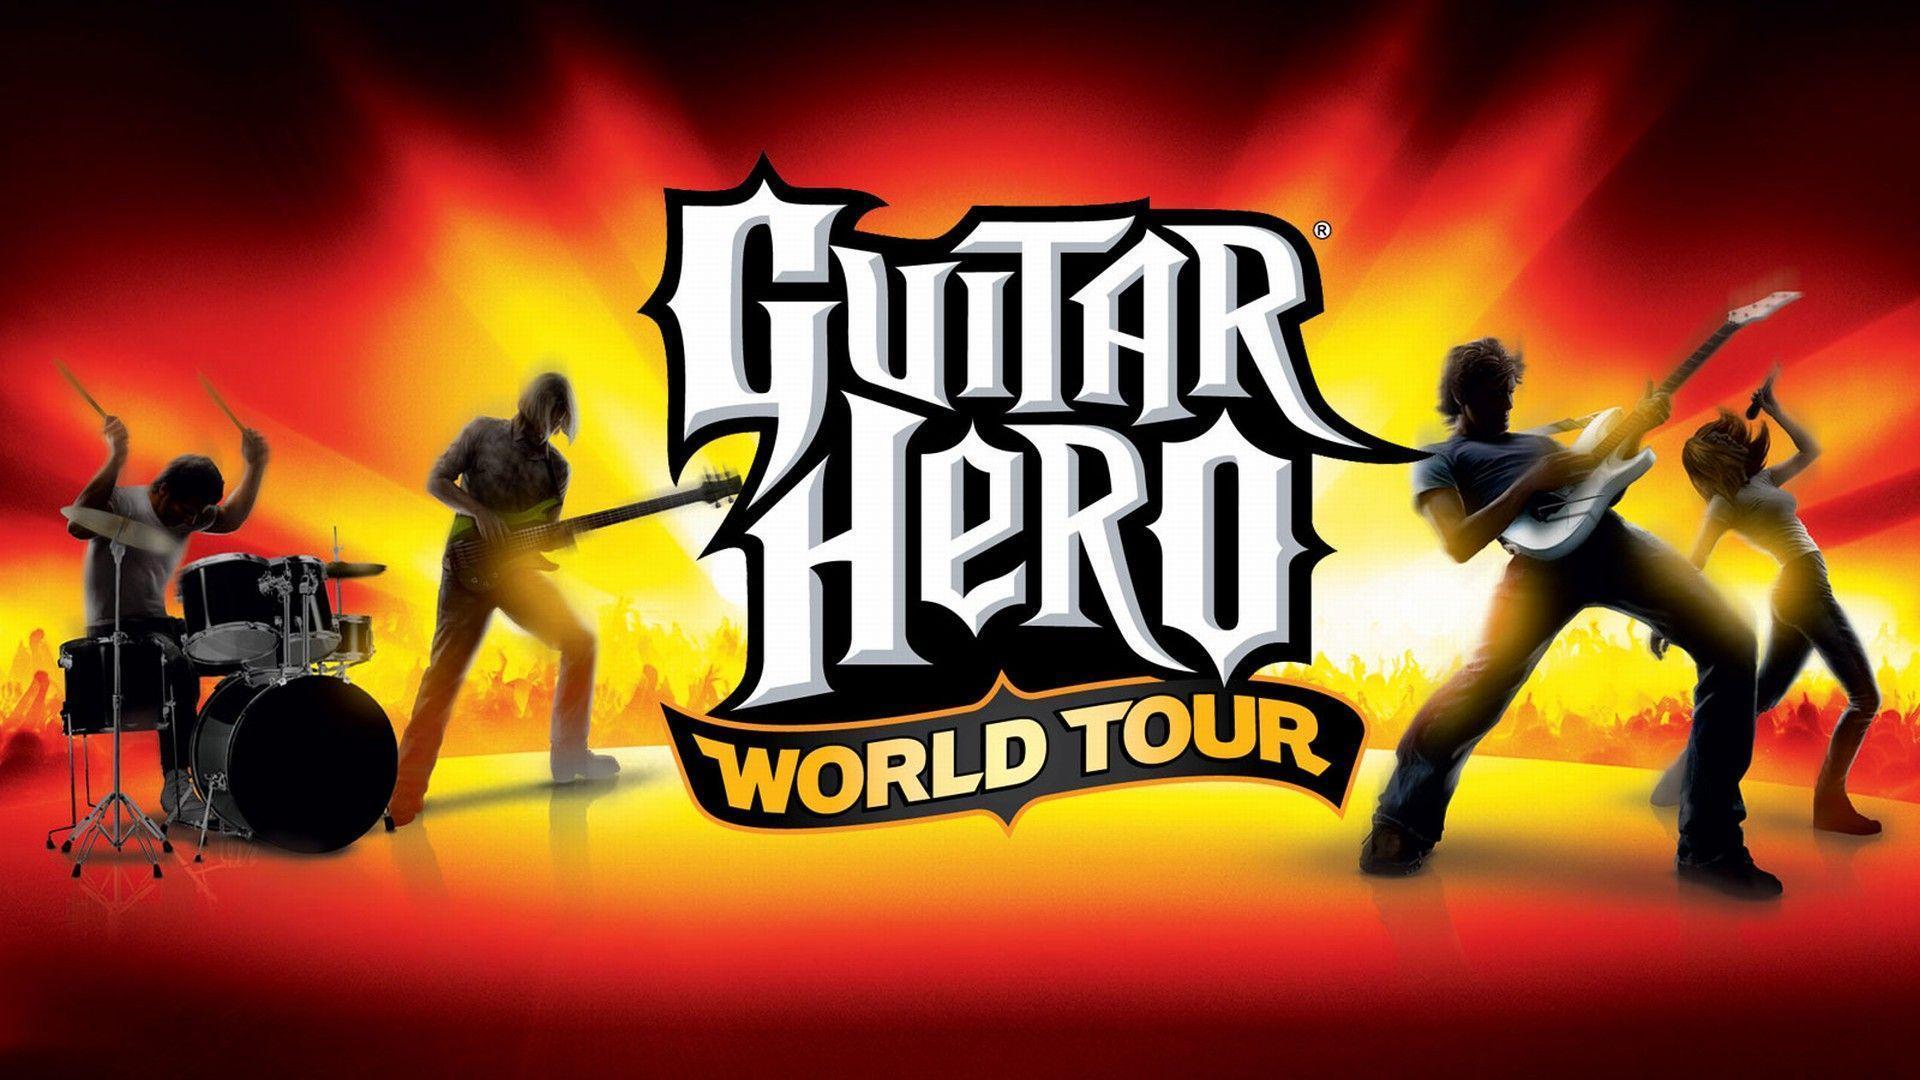 Guitar Hero: World Tour HD Wallpaper. Background